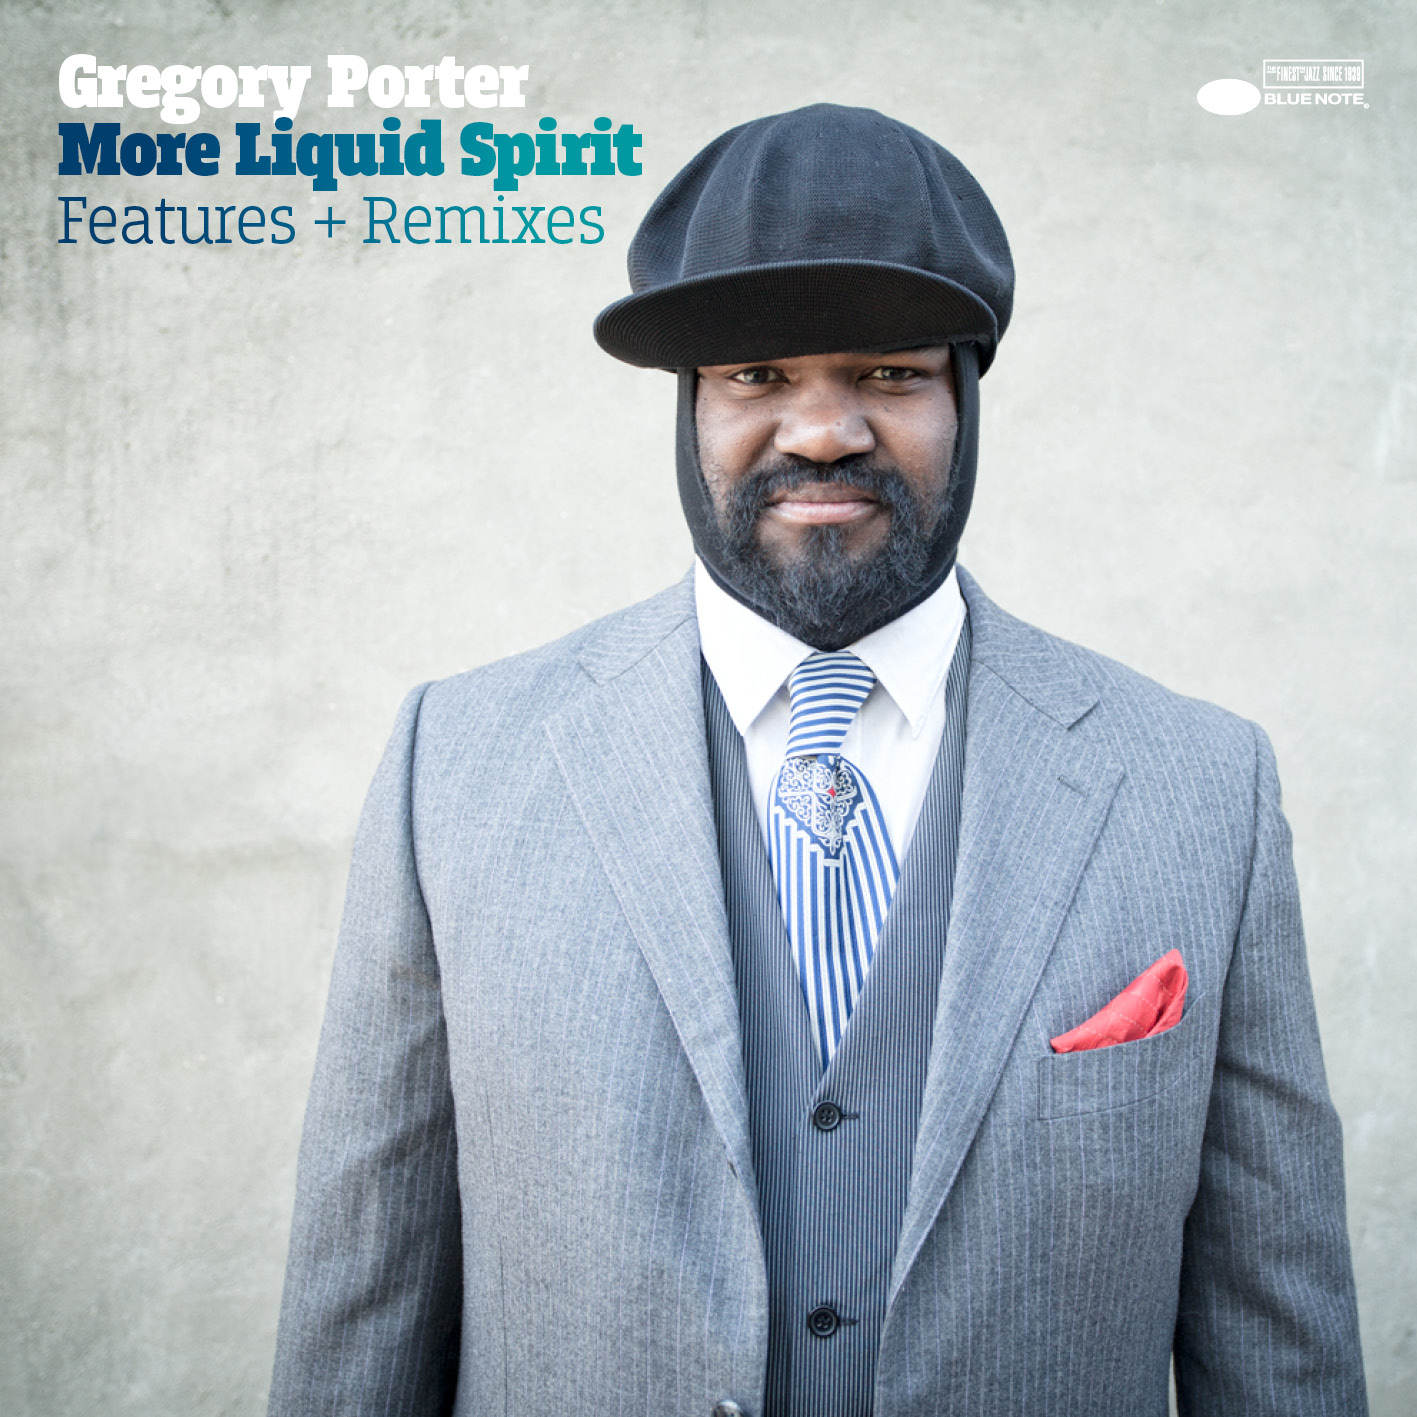 Gregory Porter - More Liquid Spirit: Features + Remixes (2014) [HDTracks FLAC 24bit/44,1kHz]